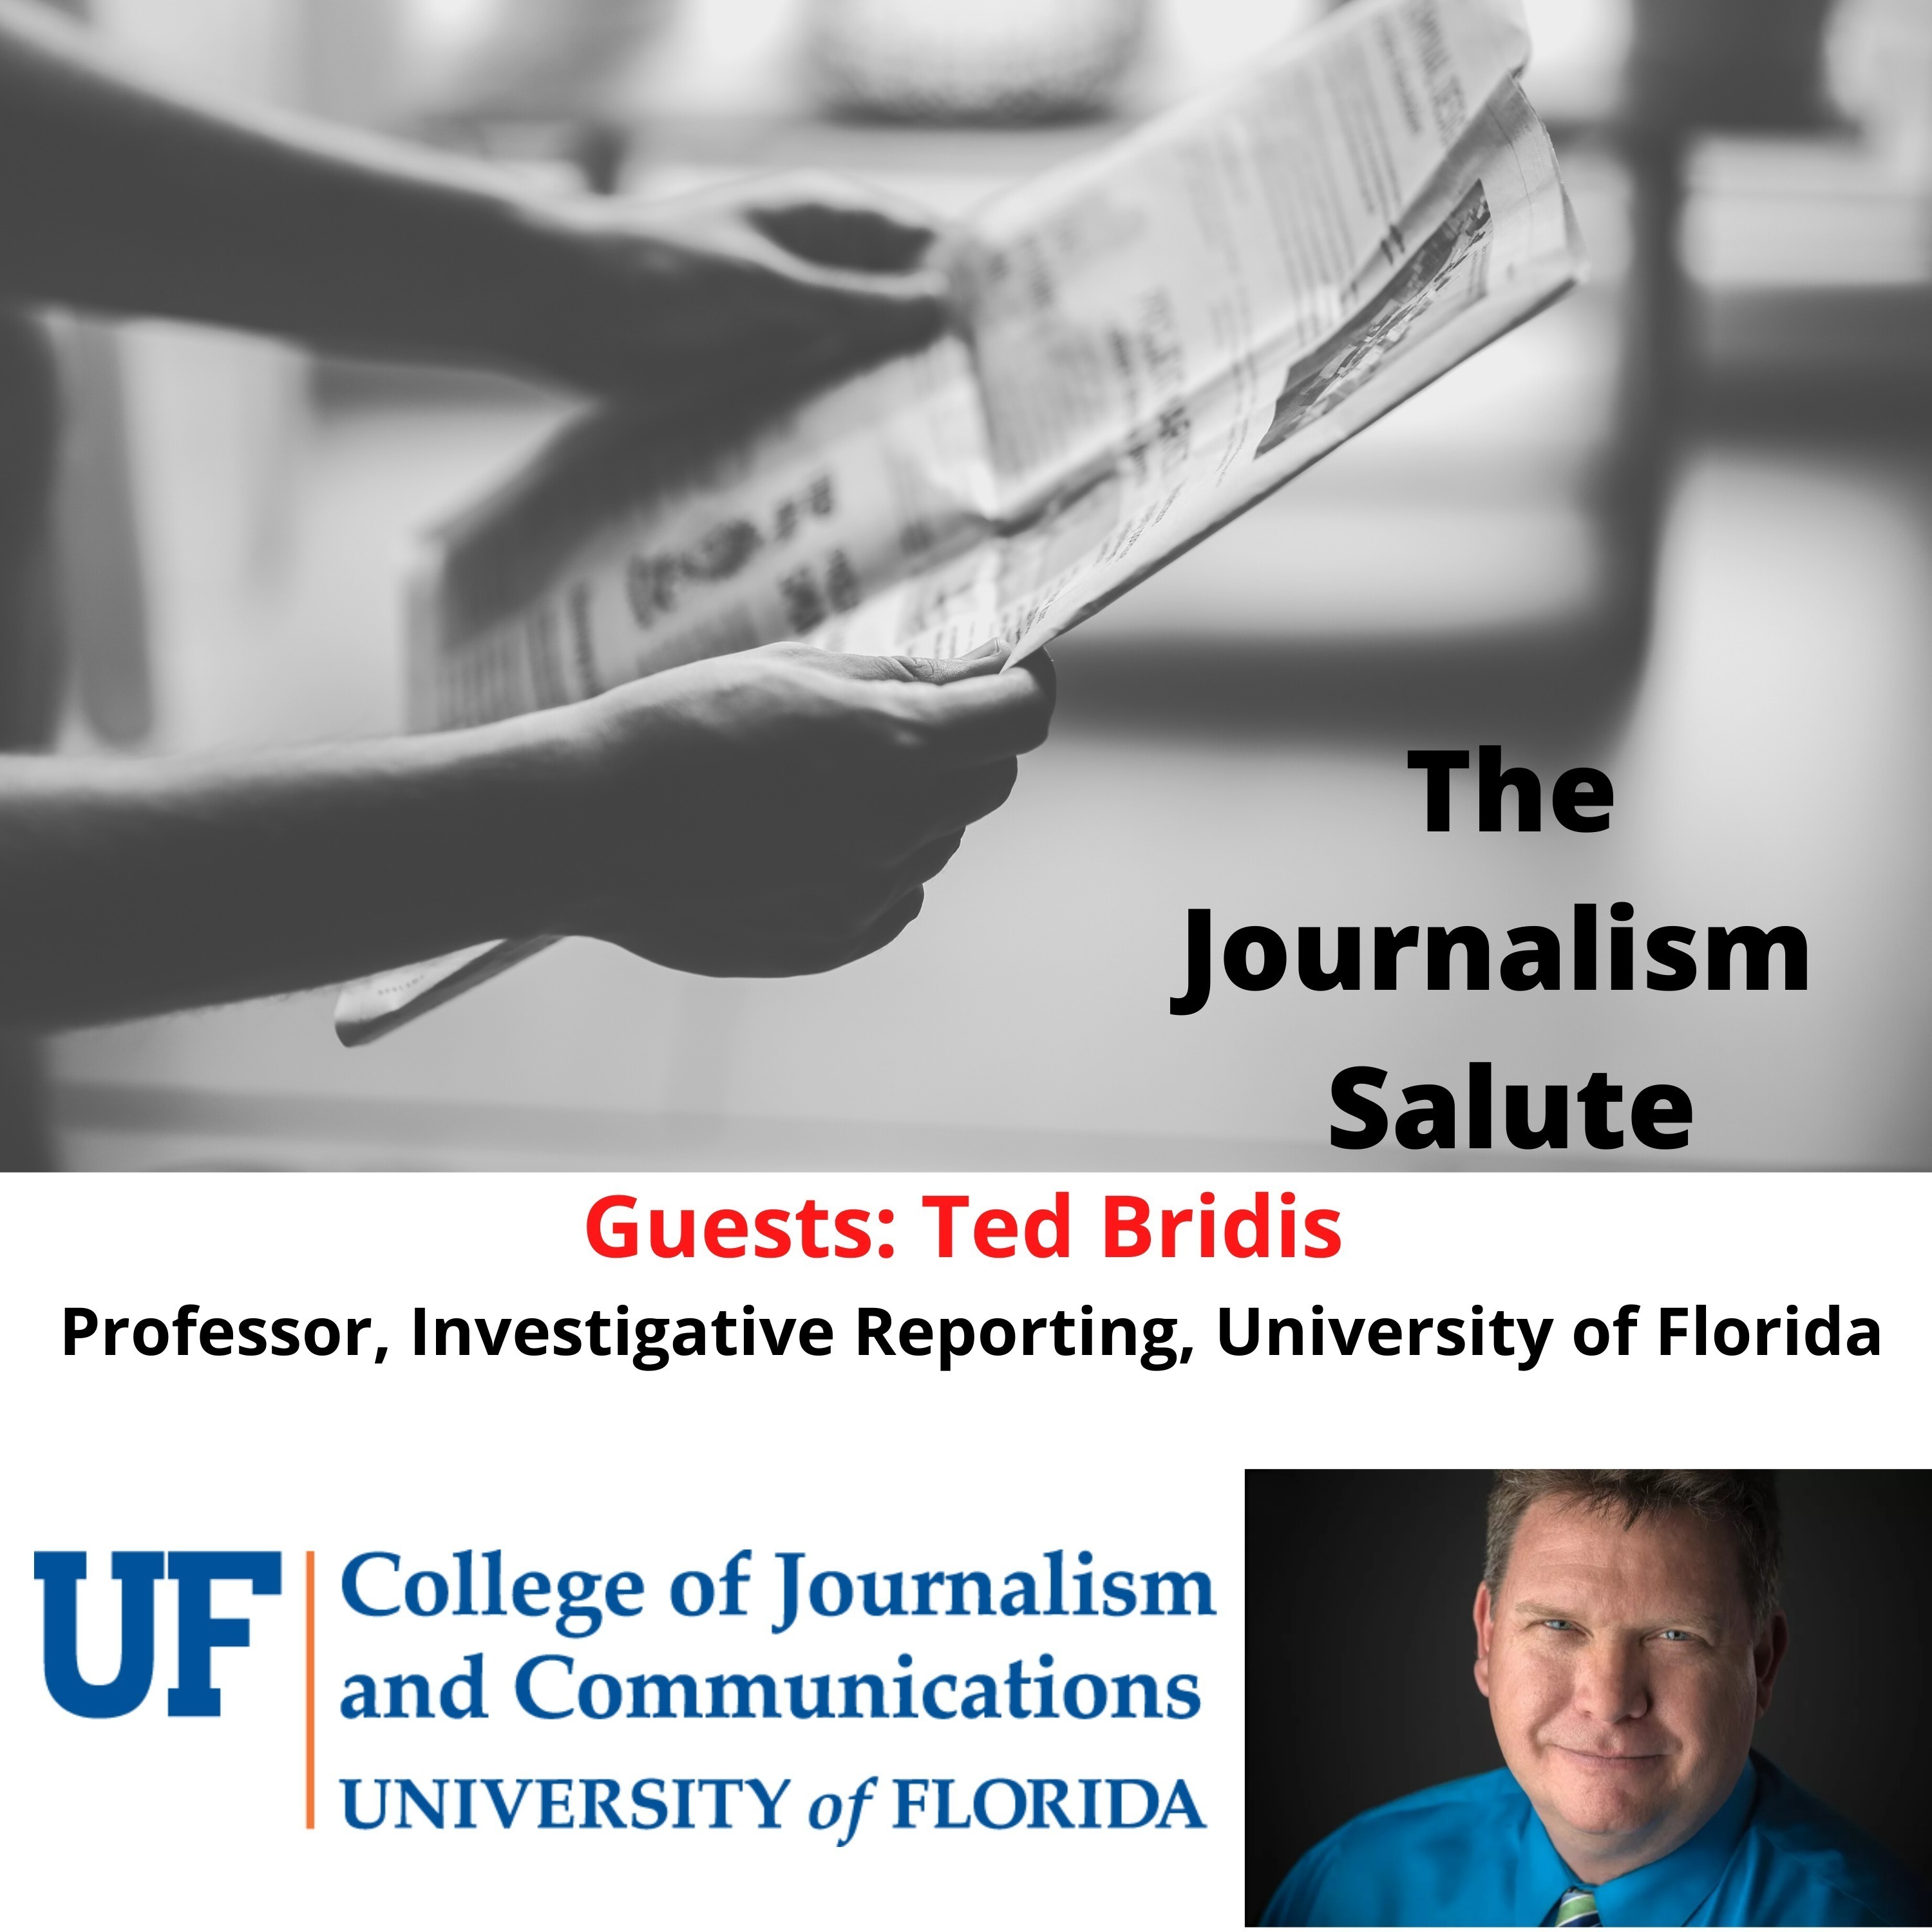 Ted Bridis, Investigative Reporting Professor, University of Florida